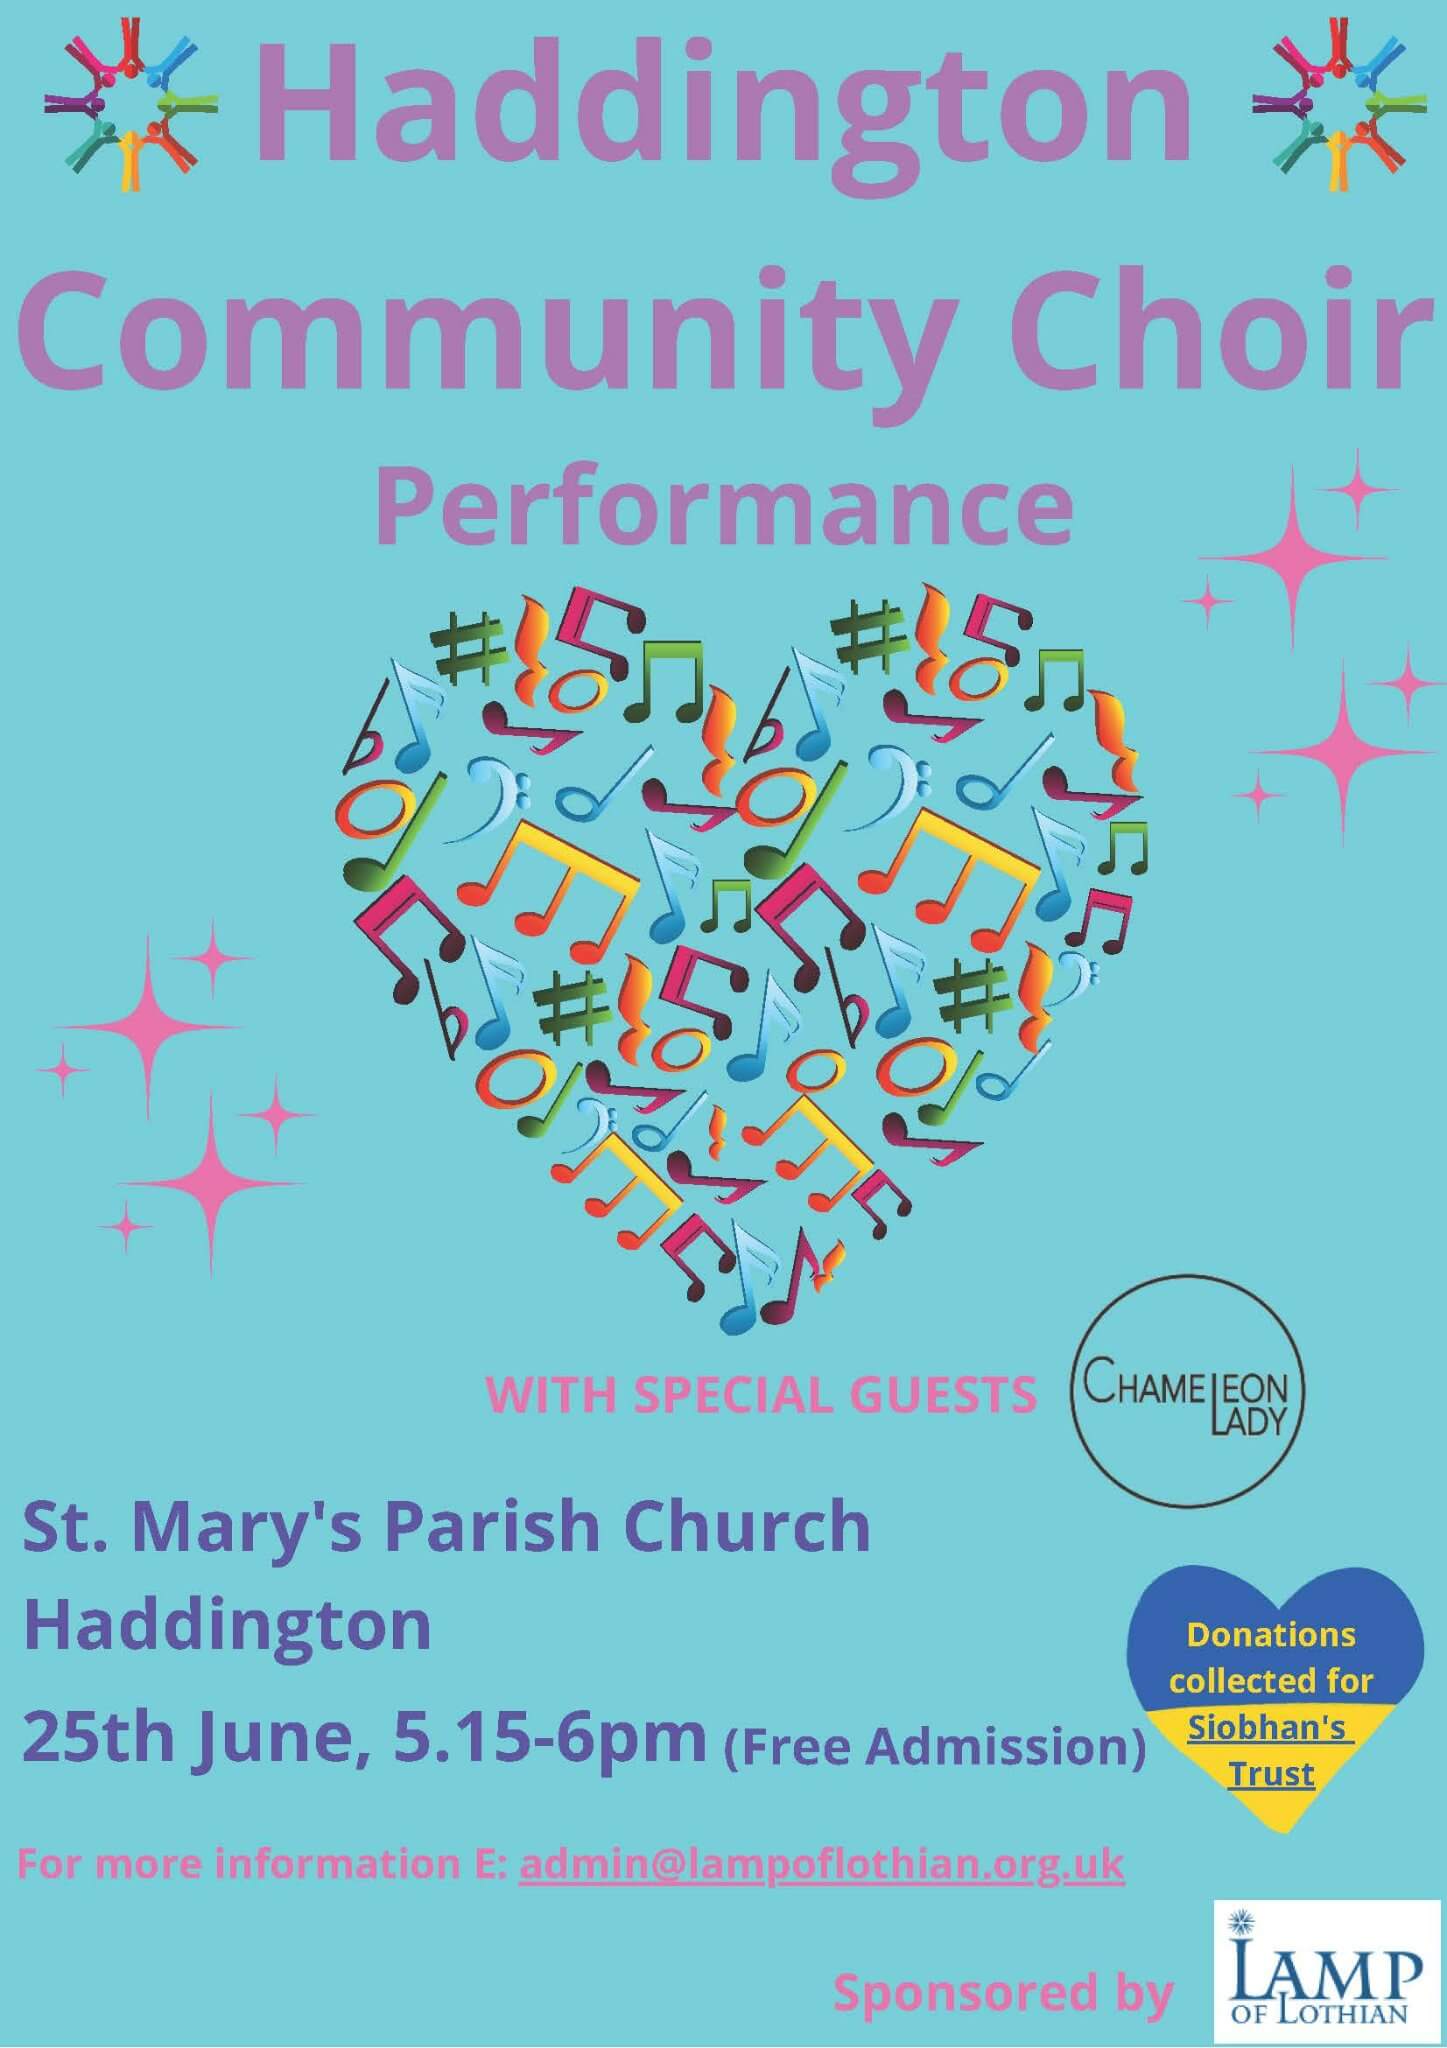 Haddington Community Choir - First Performance! :: Lamp of Lothian Trust